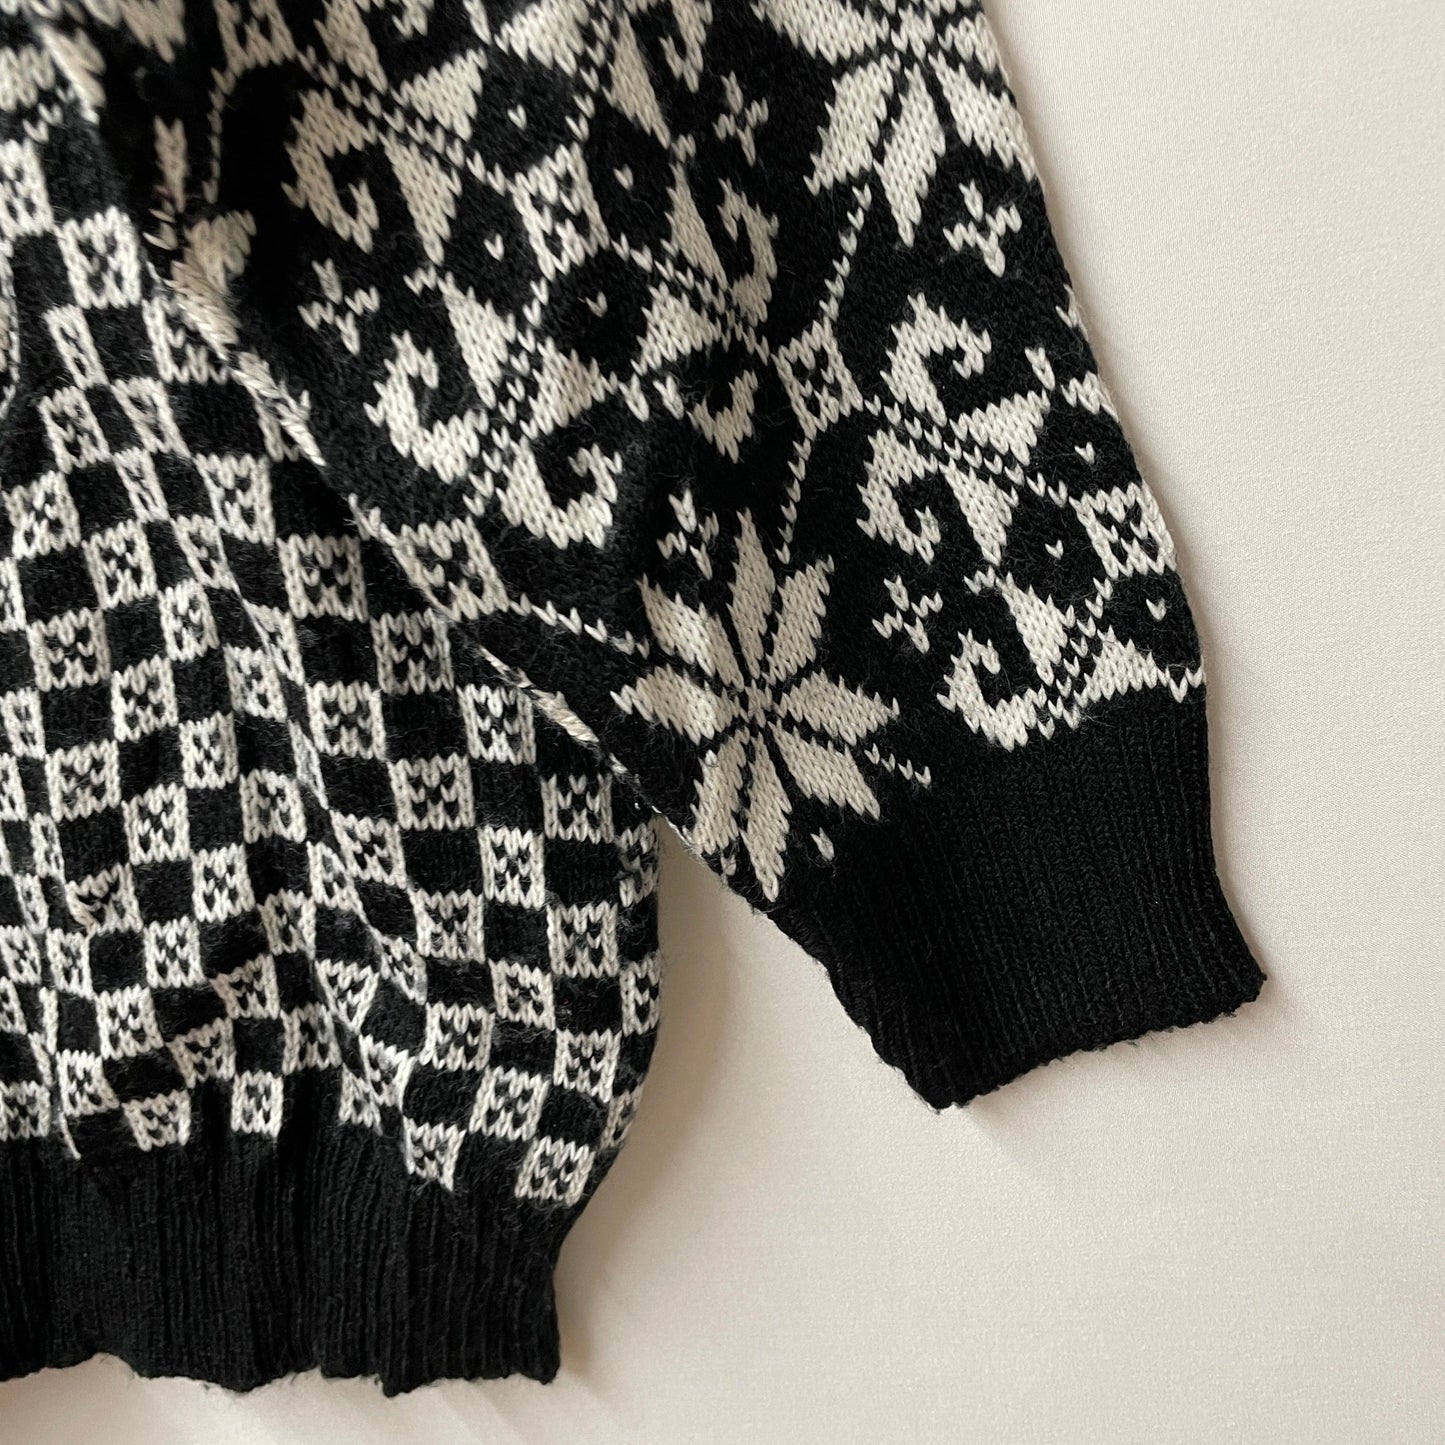 Vintage knit knit/sweater